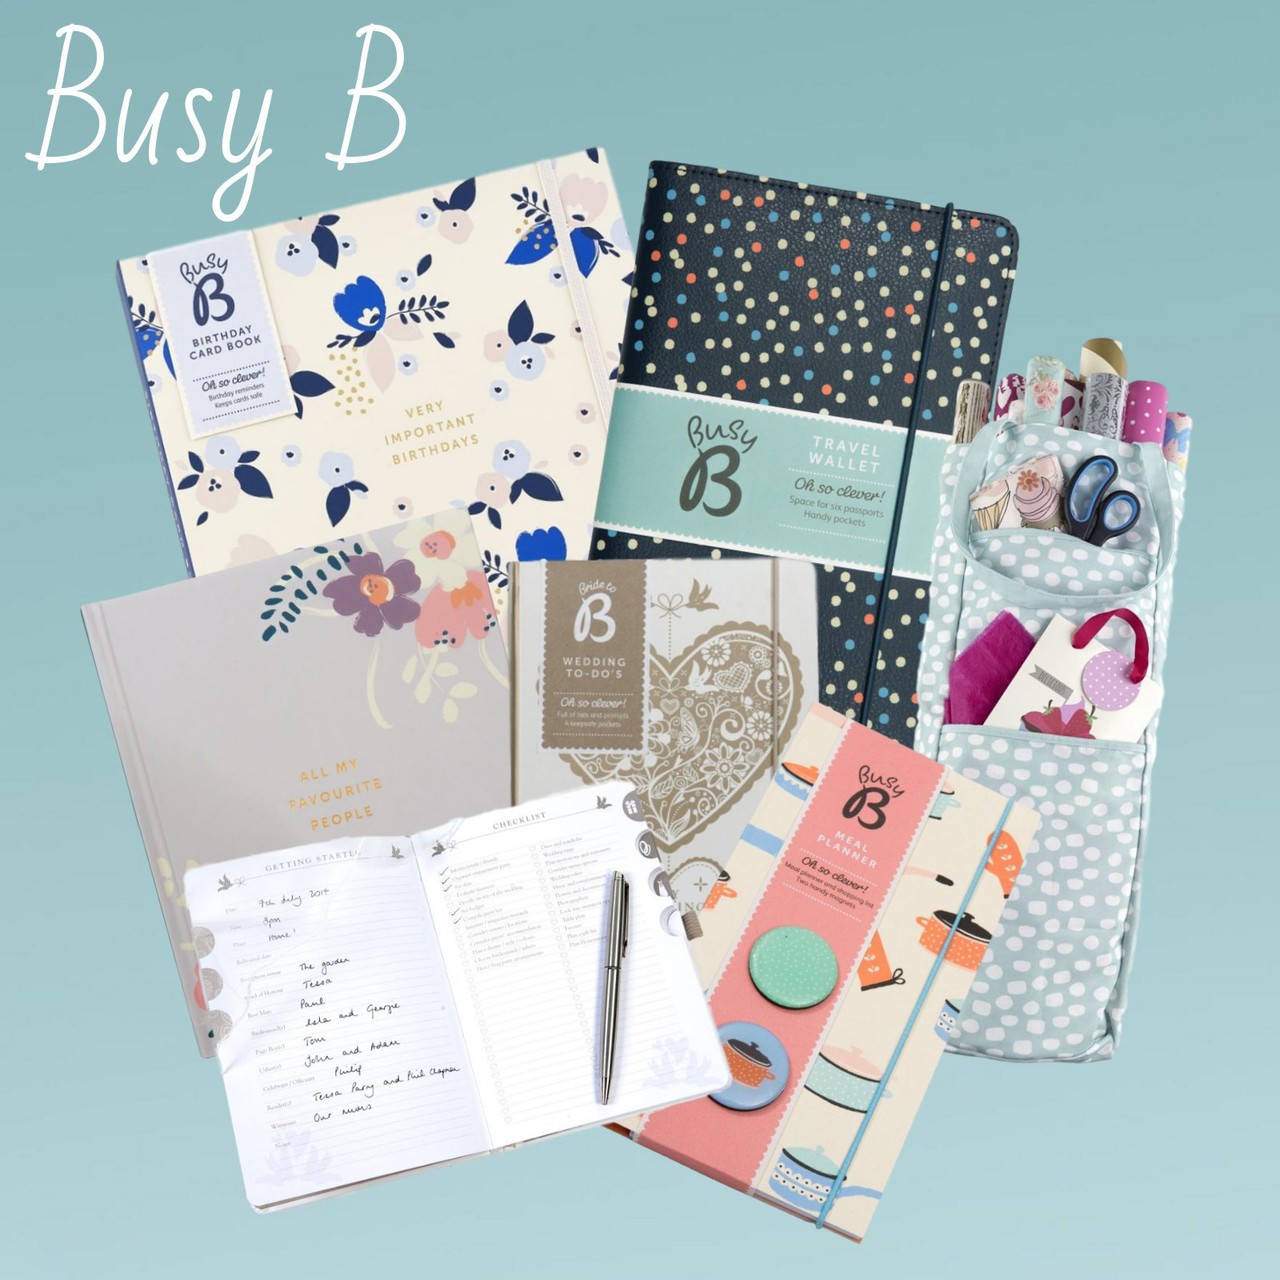 Busy b stationery range including wedding planner